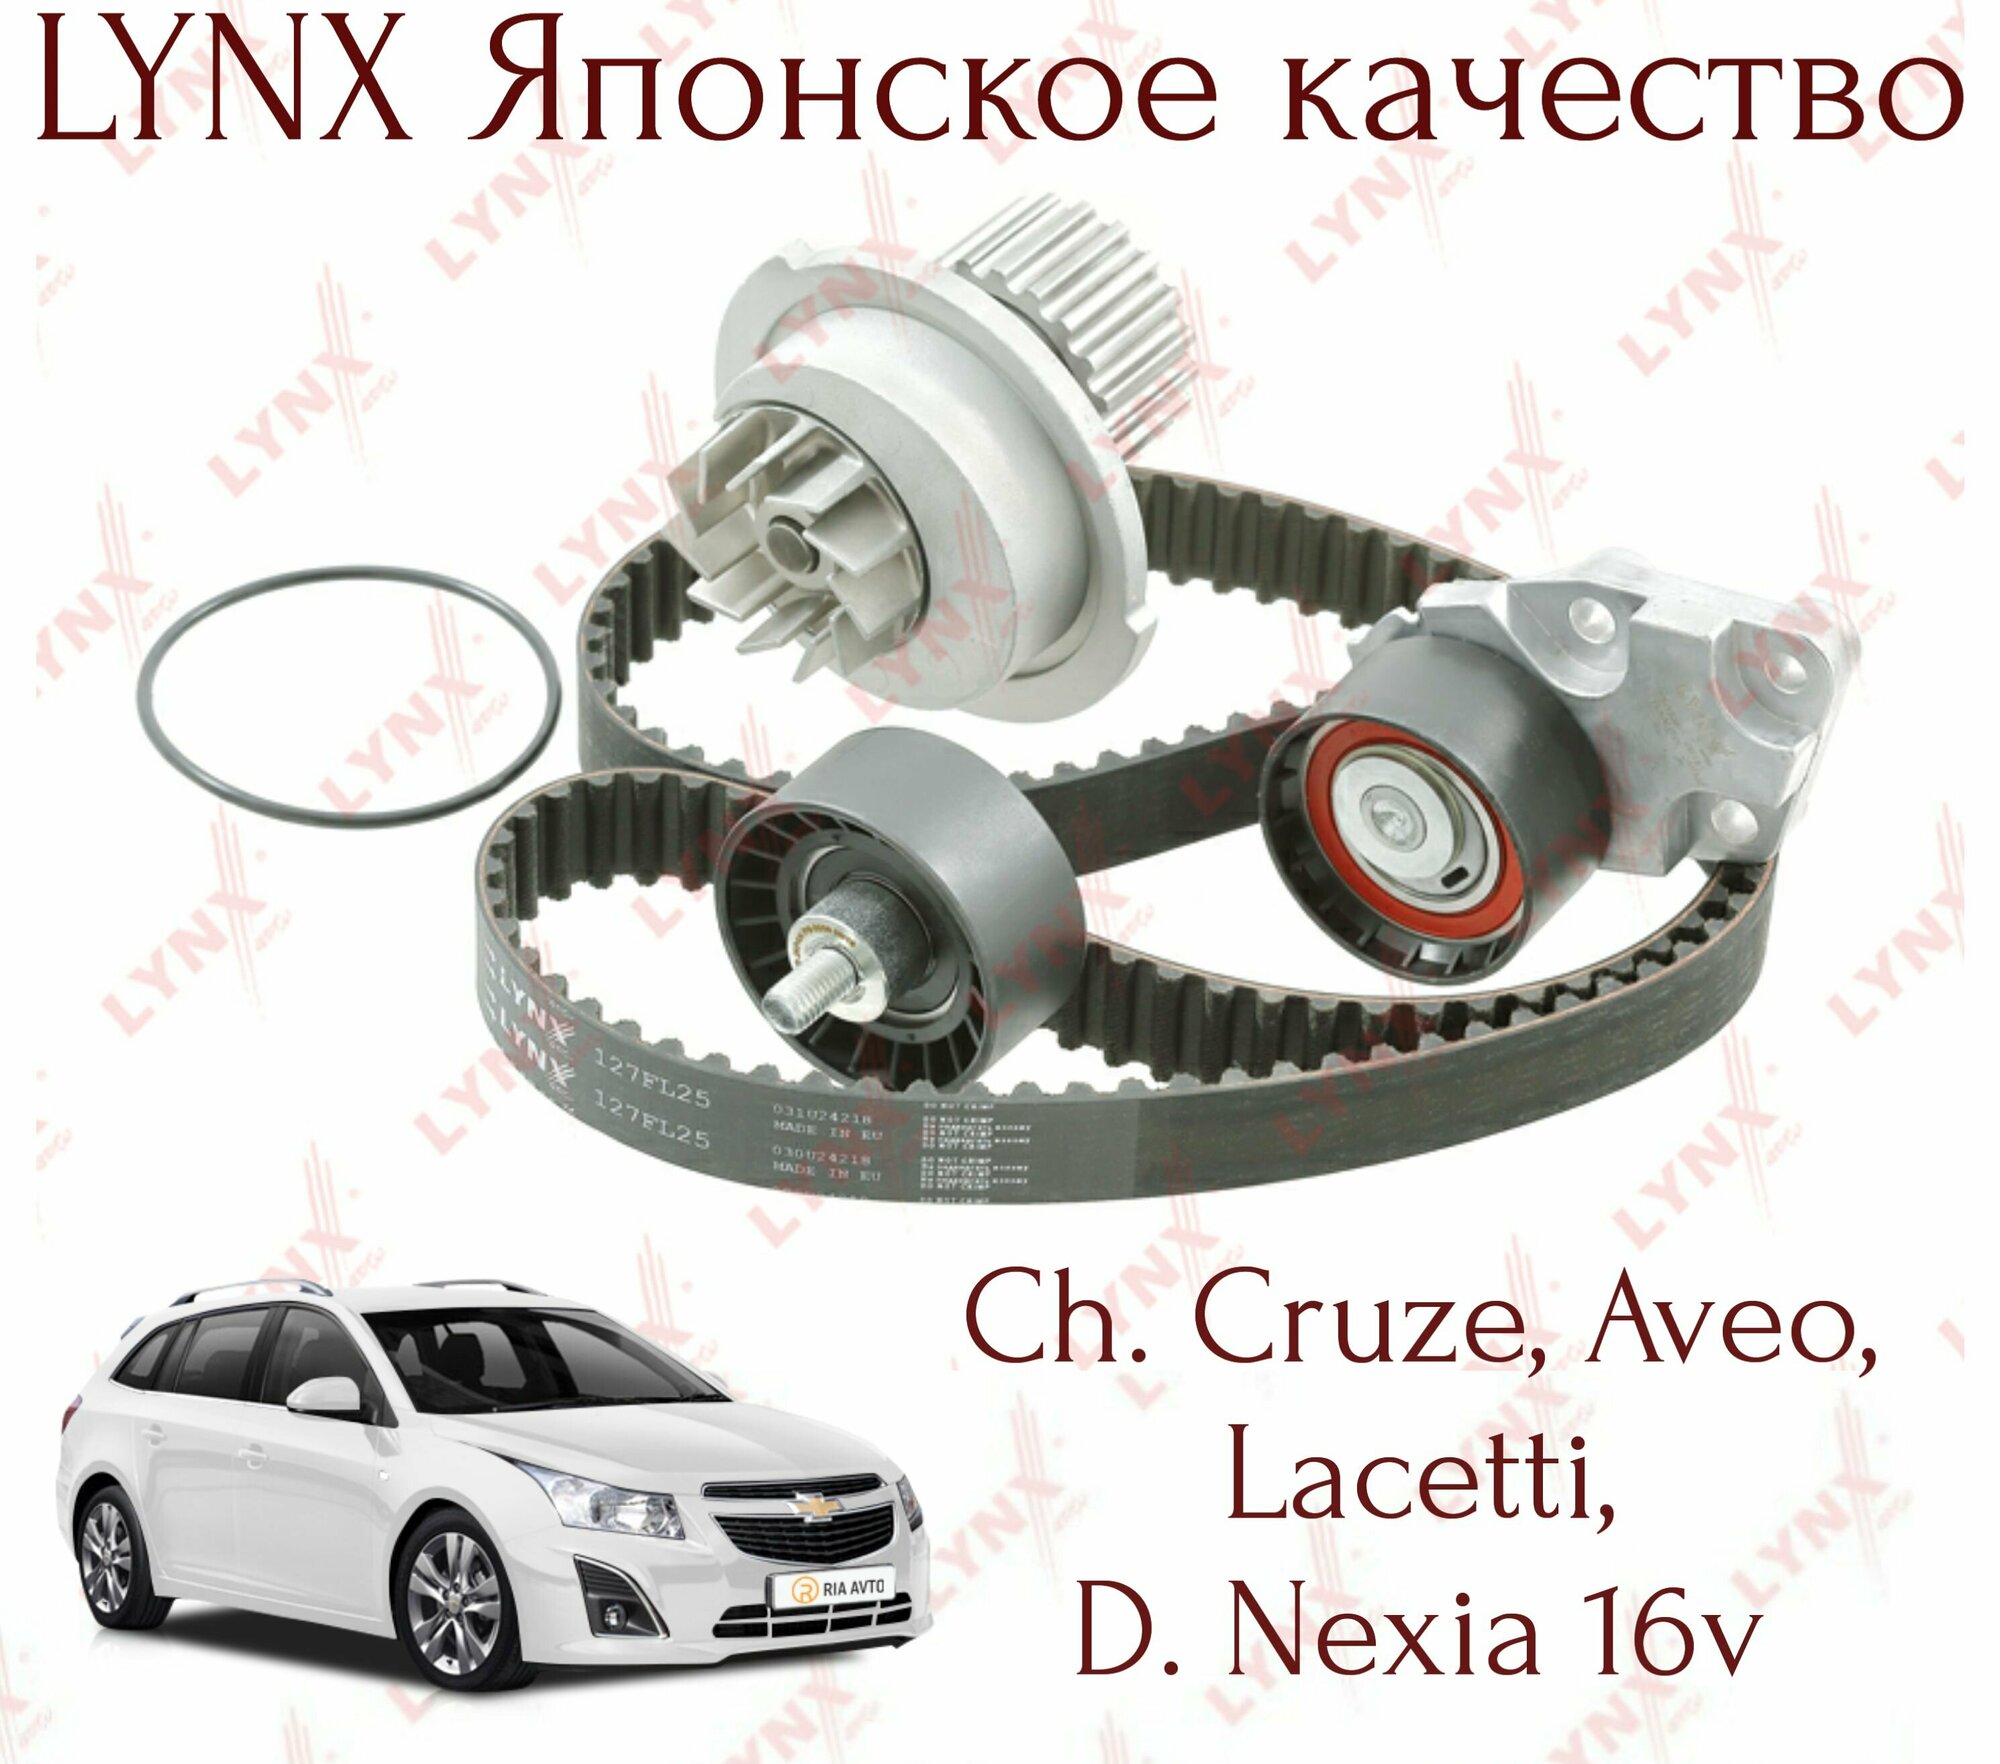 Комплект ГРМ с помпой Lynx (Япония) Chevrolet Cruze 1.6 (109) Lacetti, D. Nexia 16кл